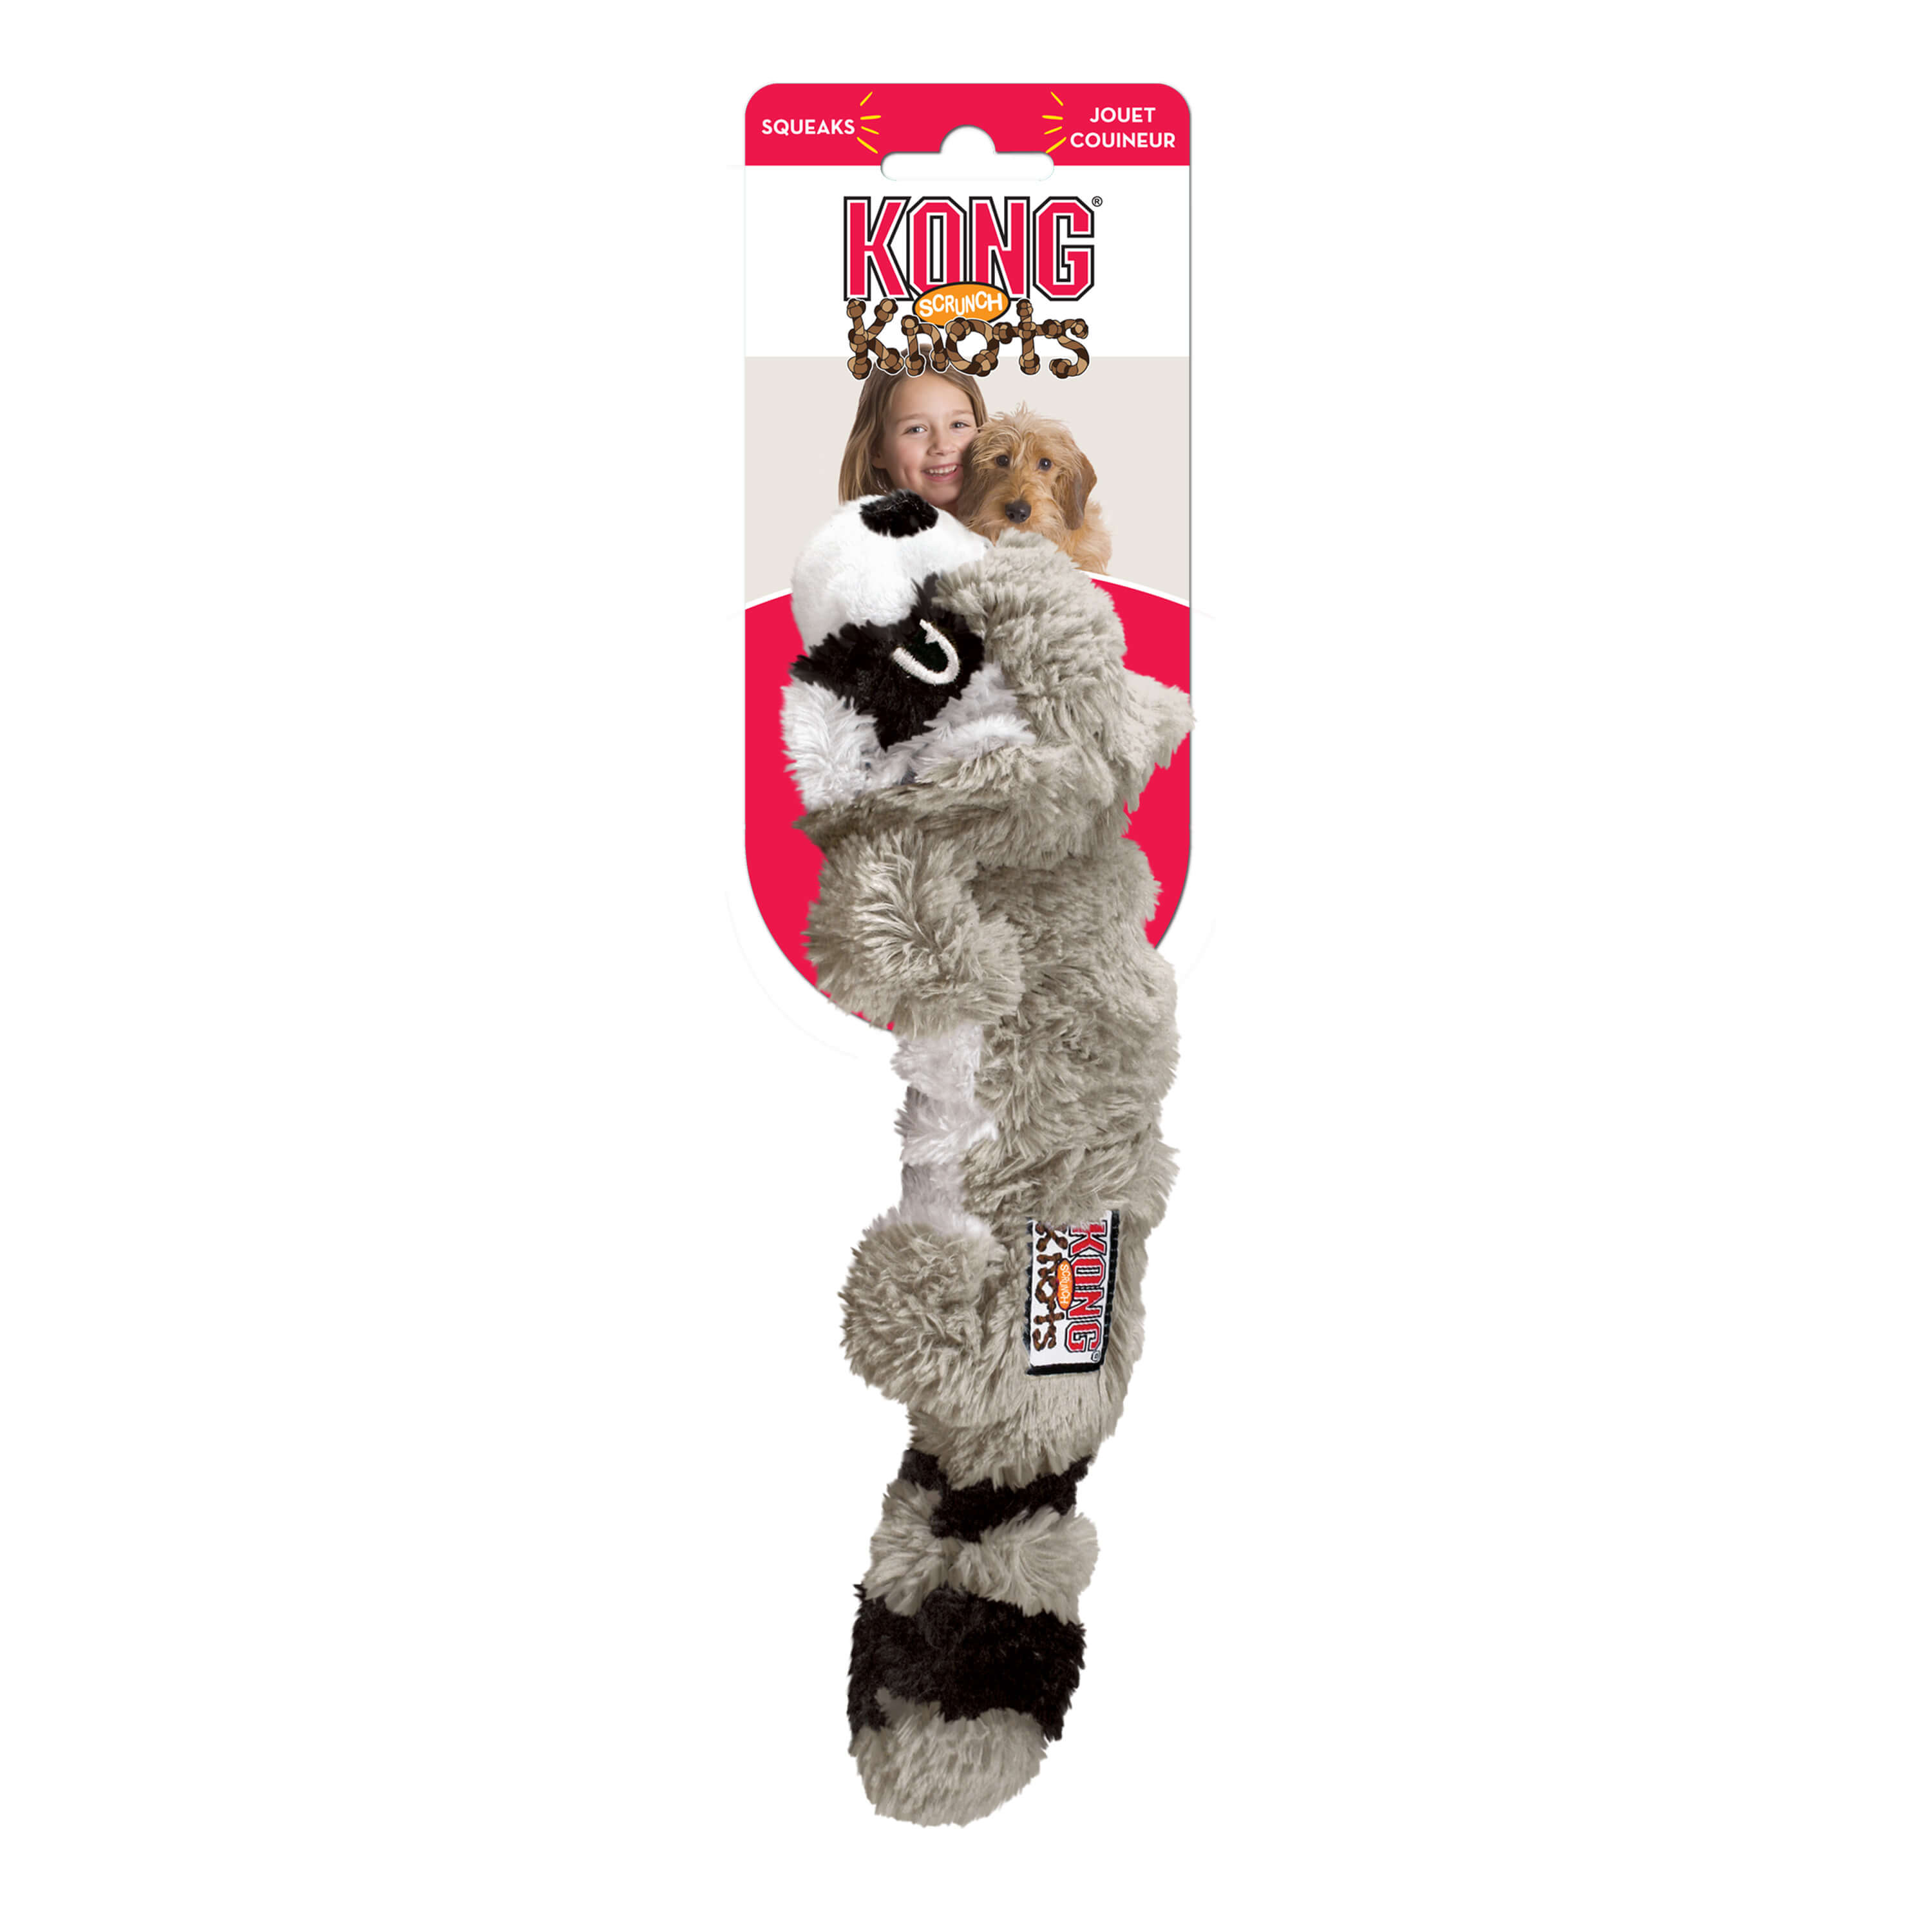 Kong dog toy - scrunch knots raccoon